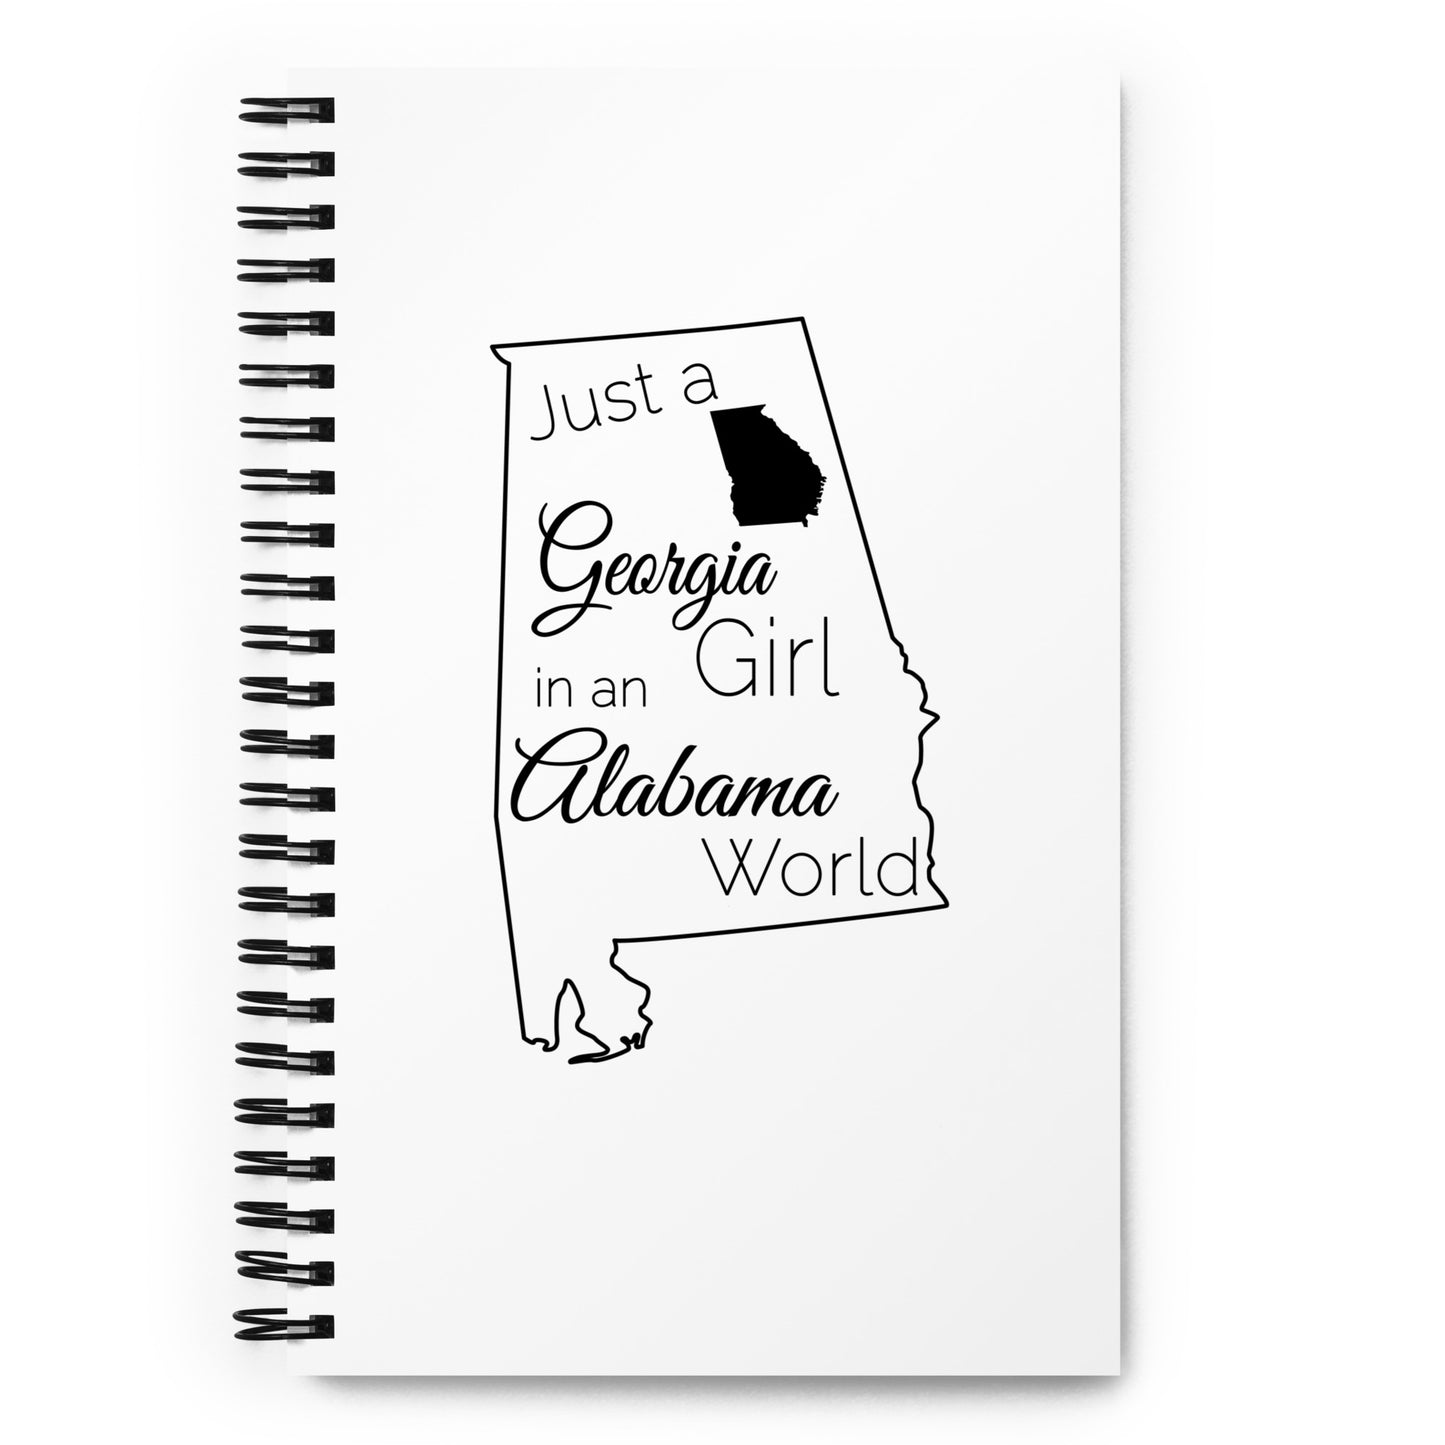 Just a Georgia Girl in an Alabama World Spiral notebook